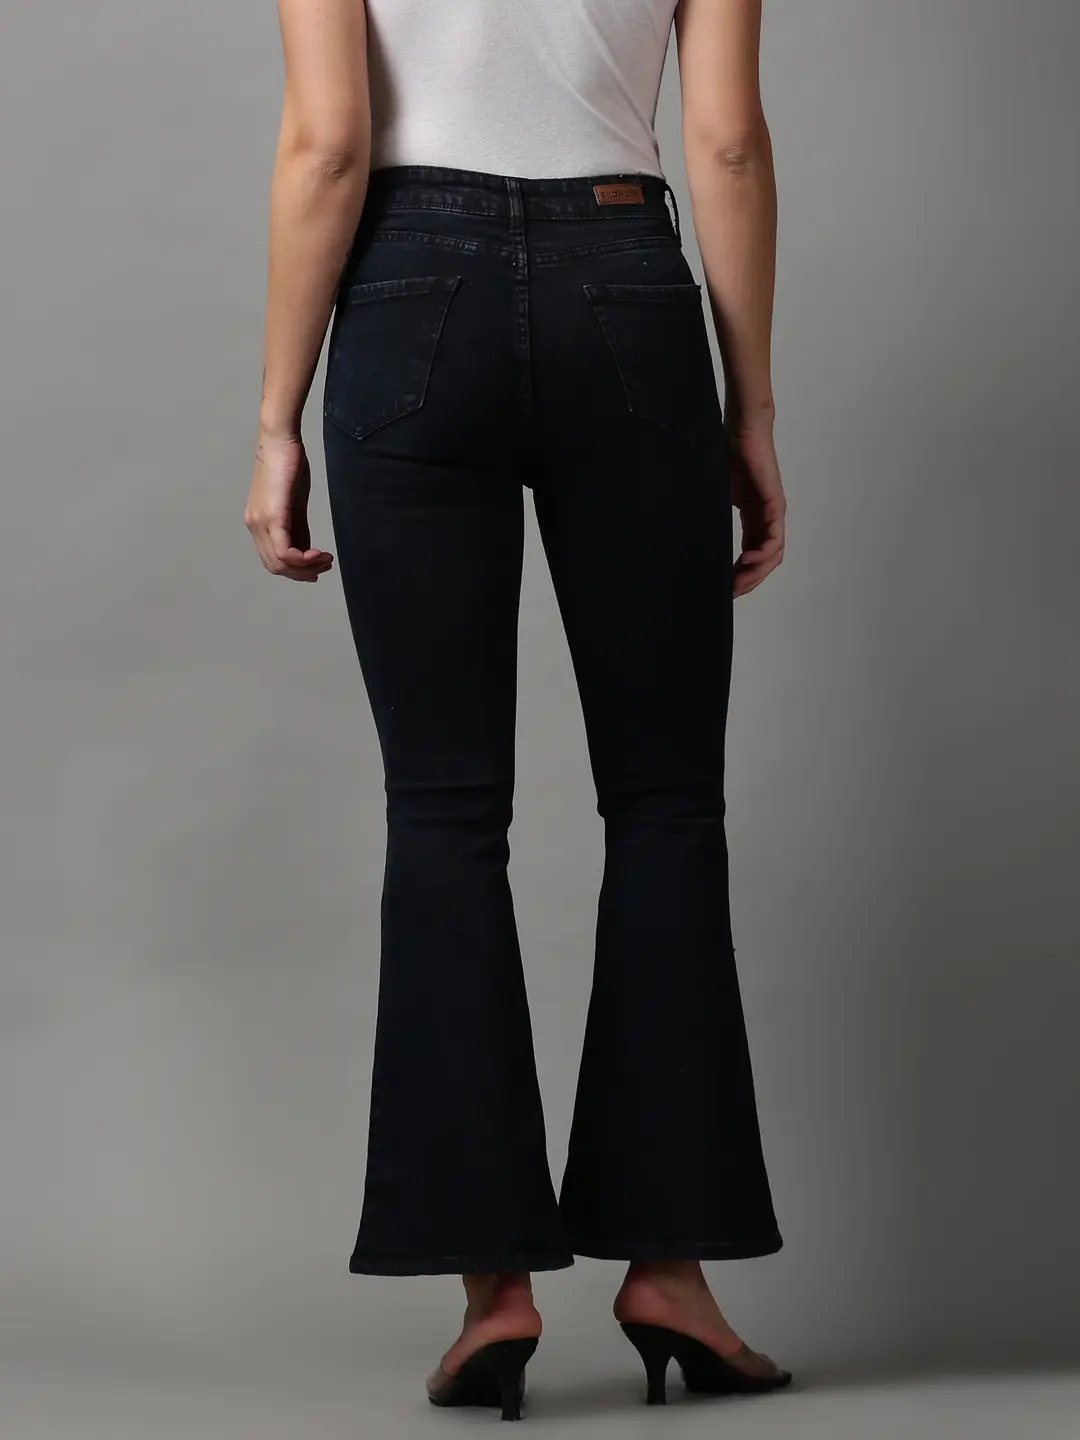 Showoff | SHOWOFF Women's Mildly Distressed Bootcut Black Denim Jeans 3